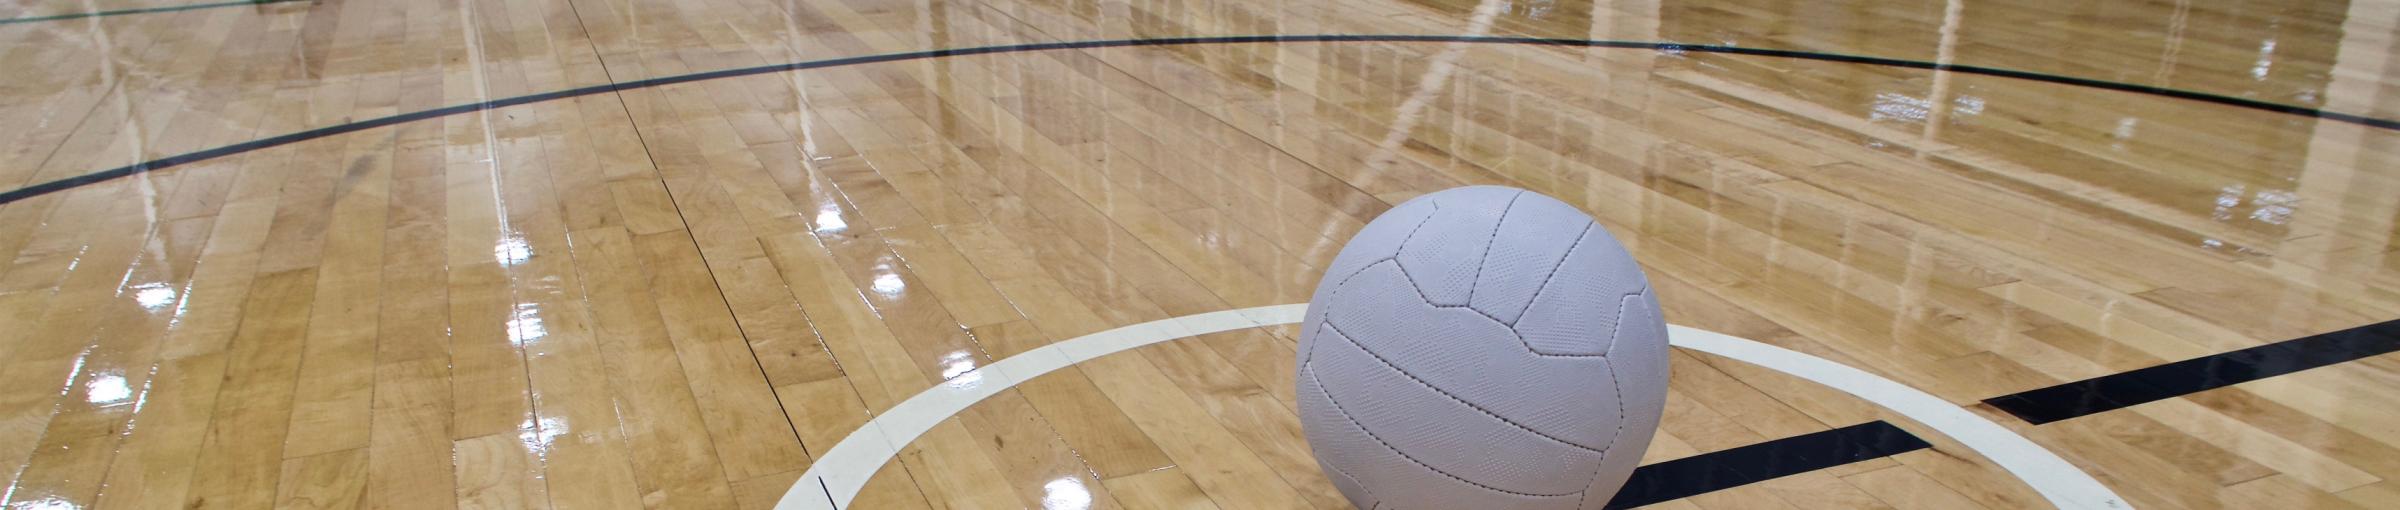 Image of netball on shiny indoor court